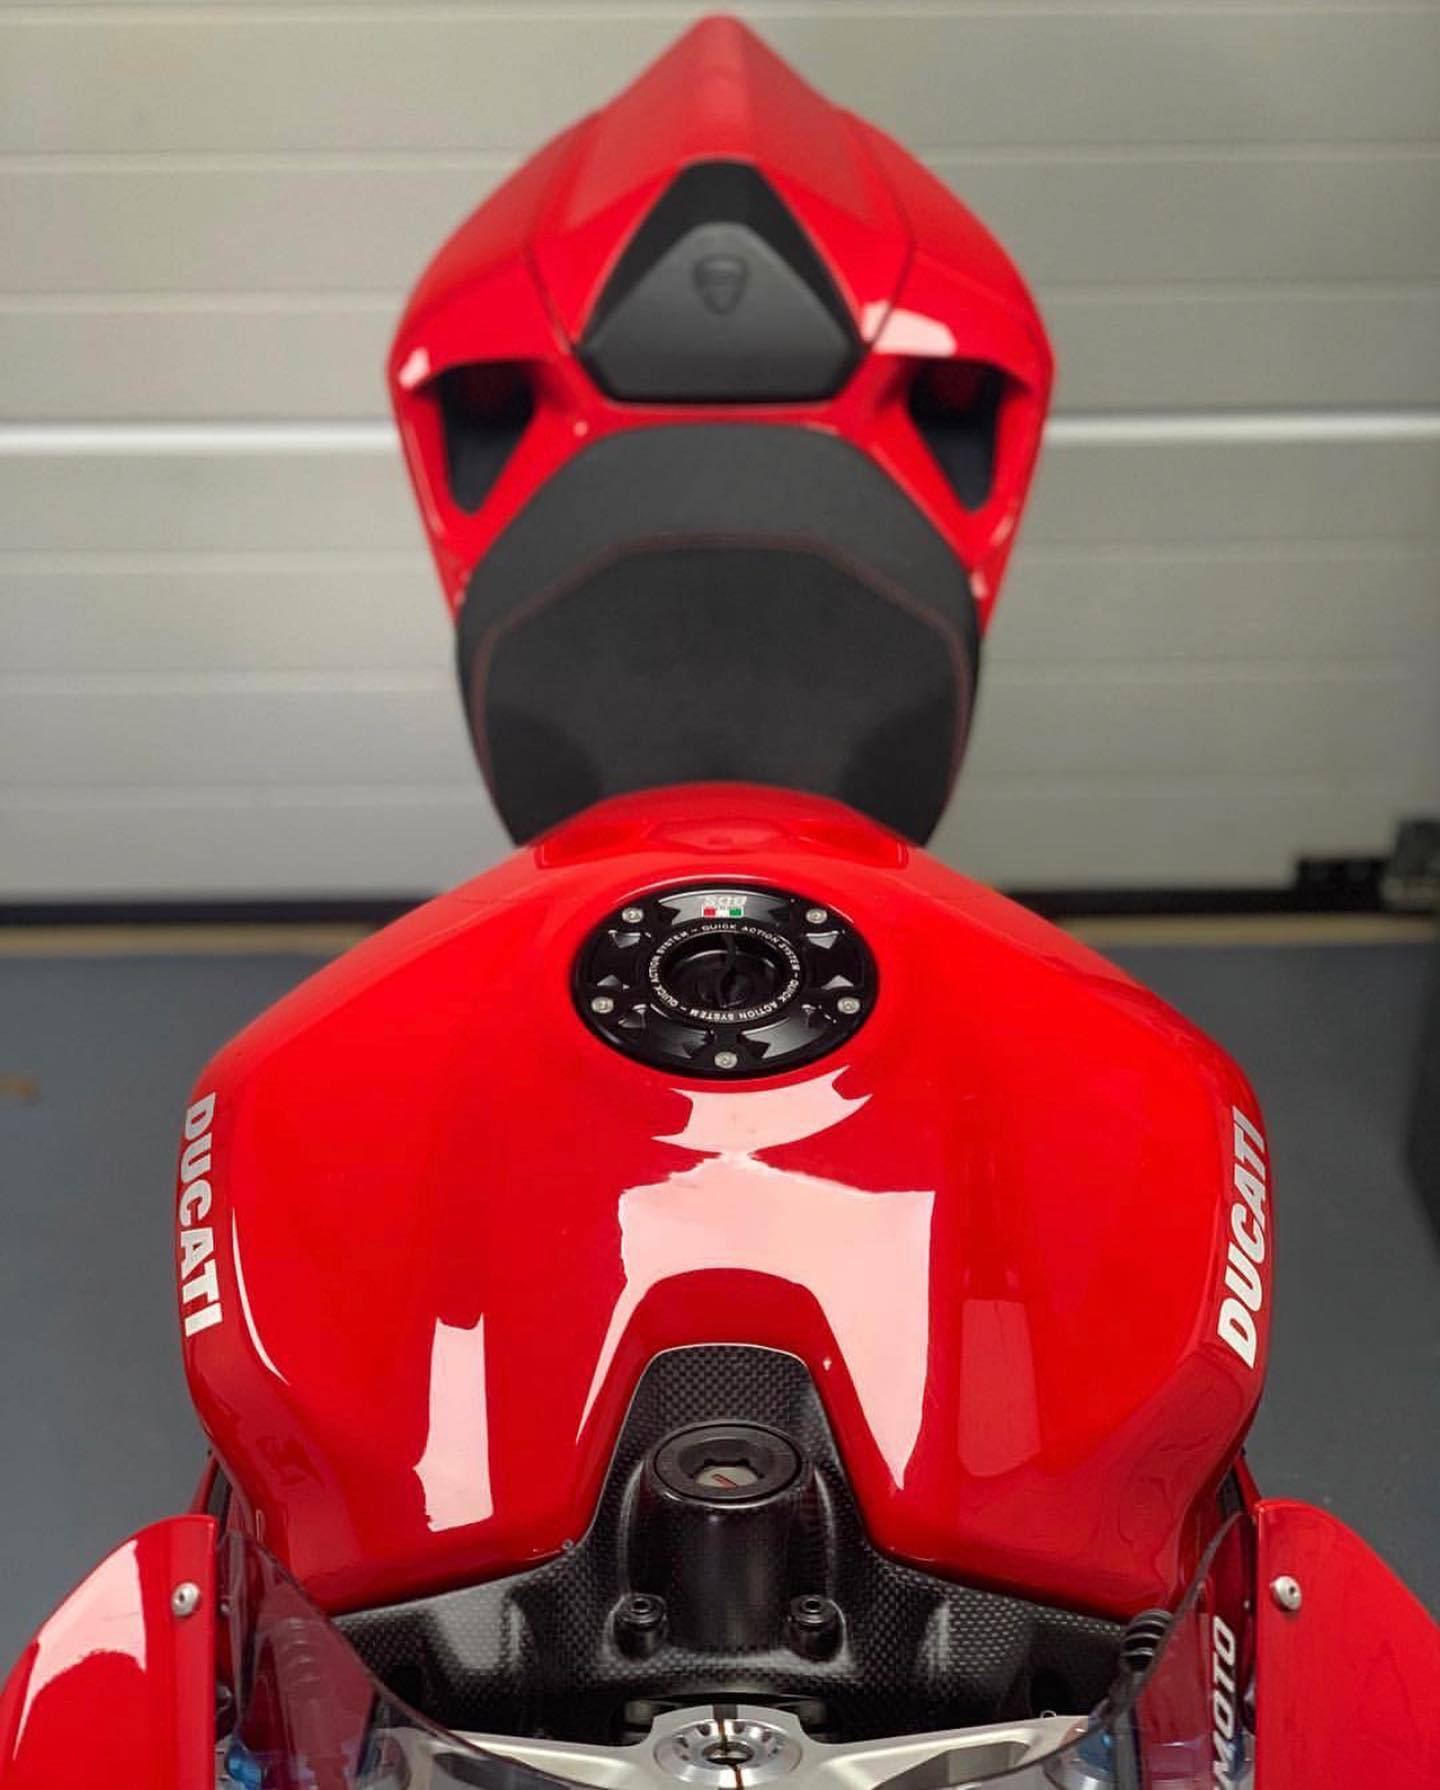 Ducati 999 Quick Action Fuel Cap by TWM